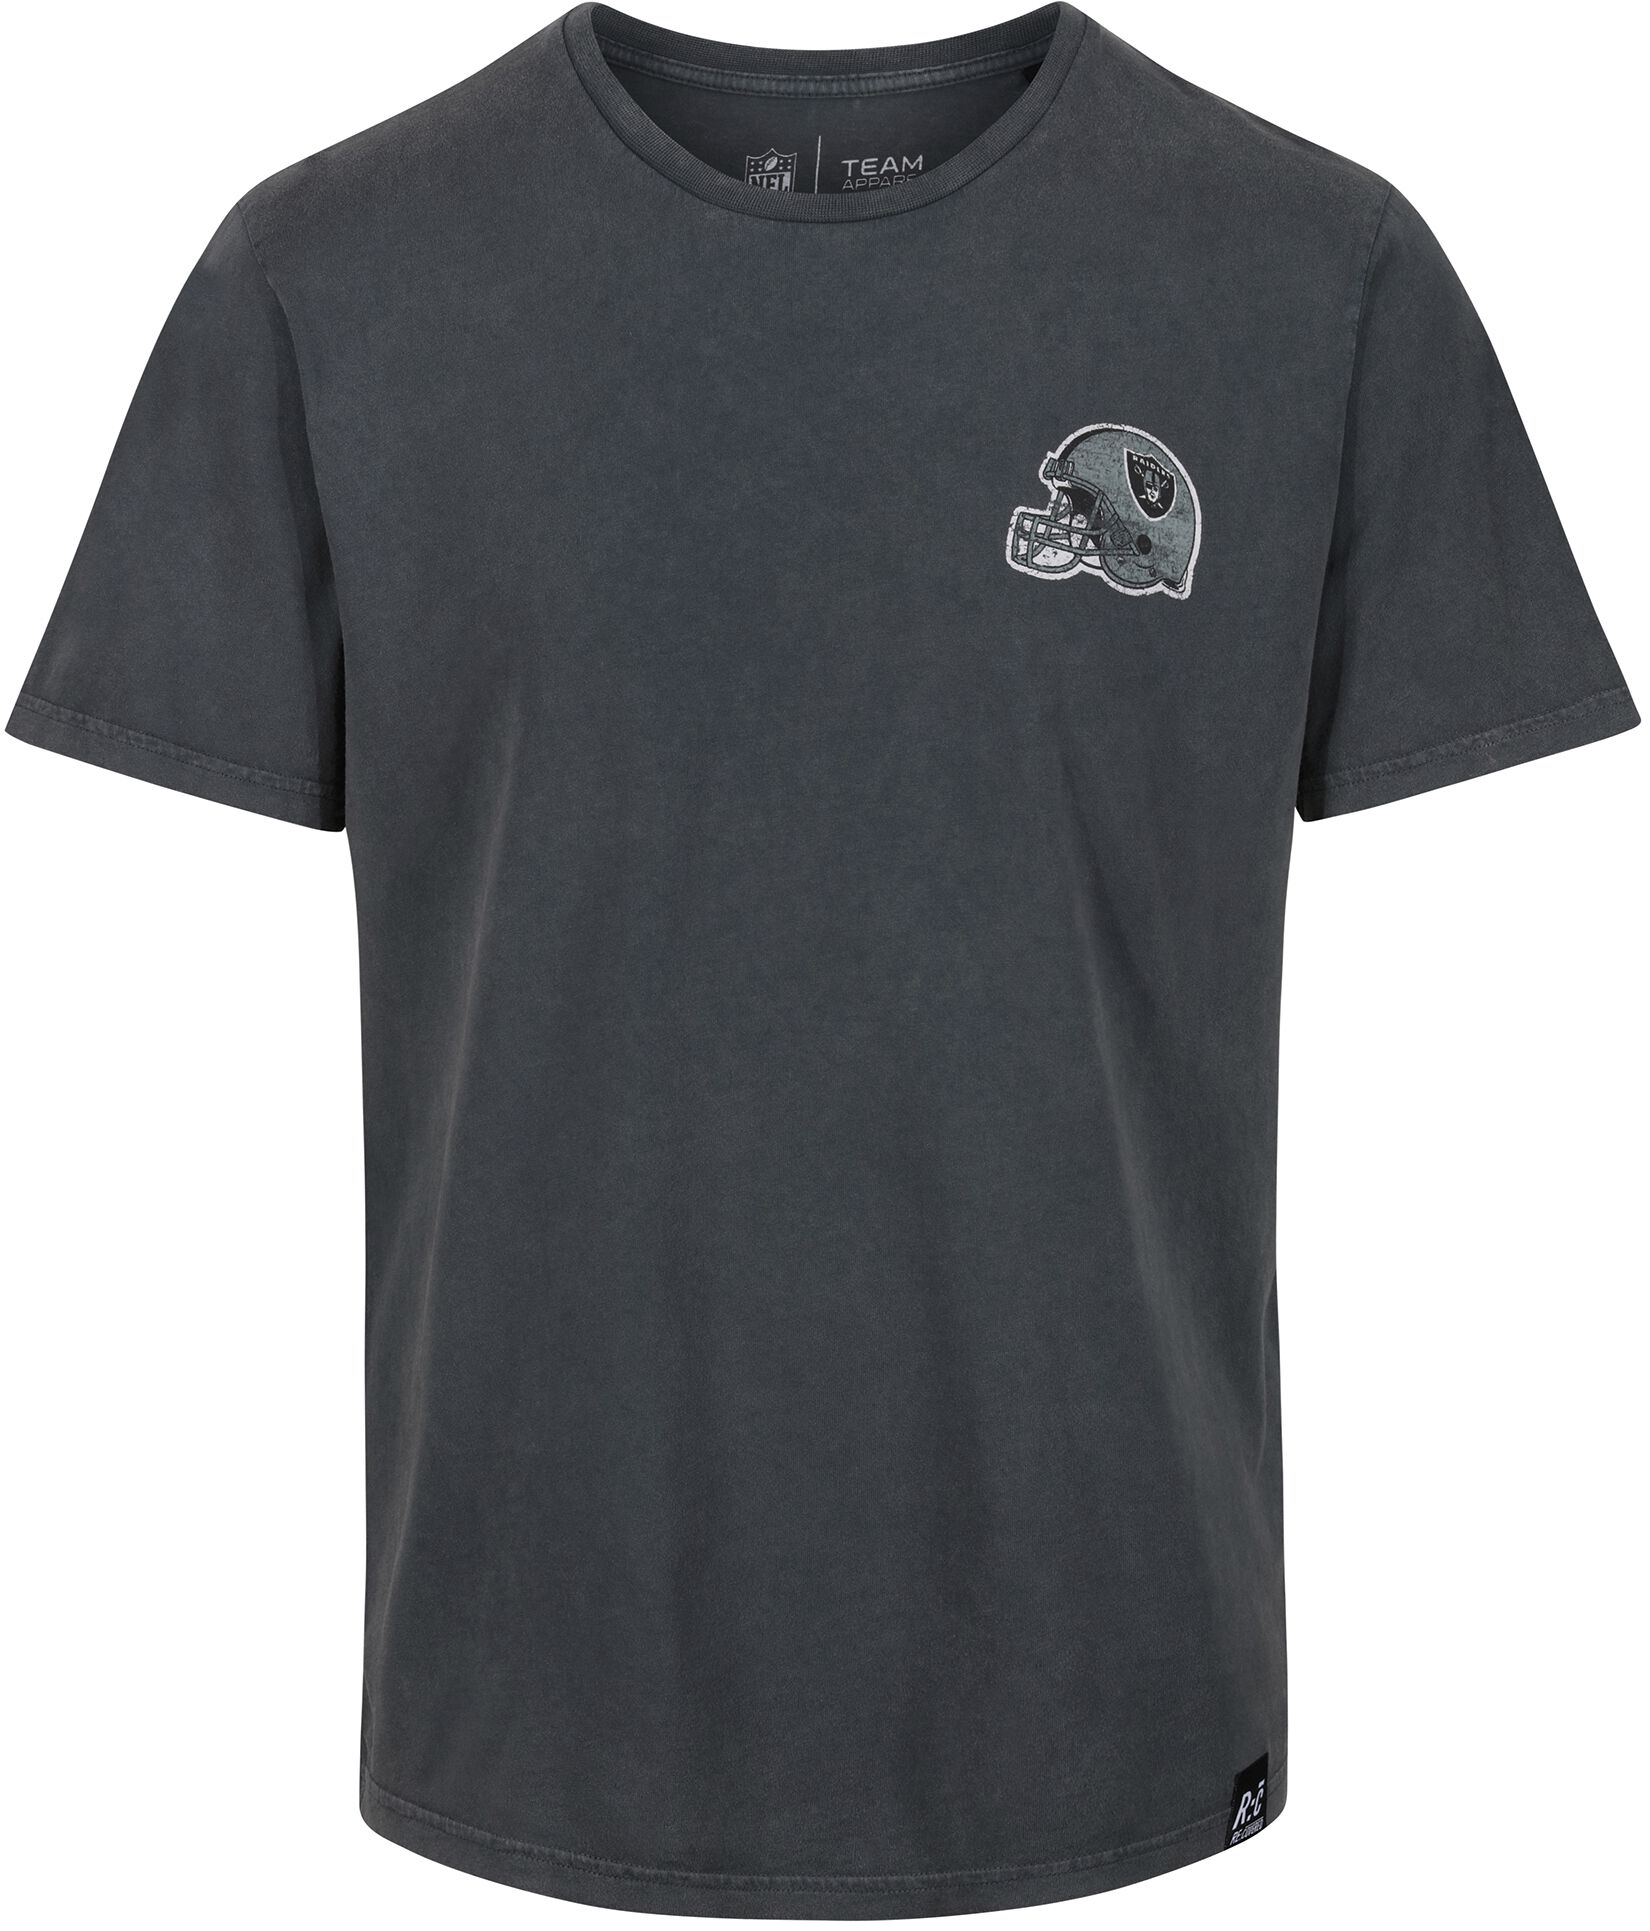 Recovered Clothing T-Shirt - NFL Raiders College Black Washed - S bis XXL - für Männer - Größe M - multicolor